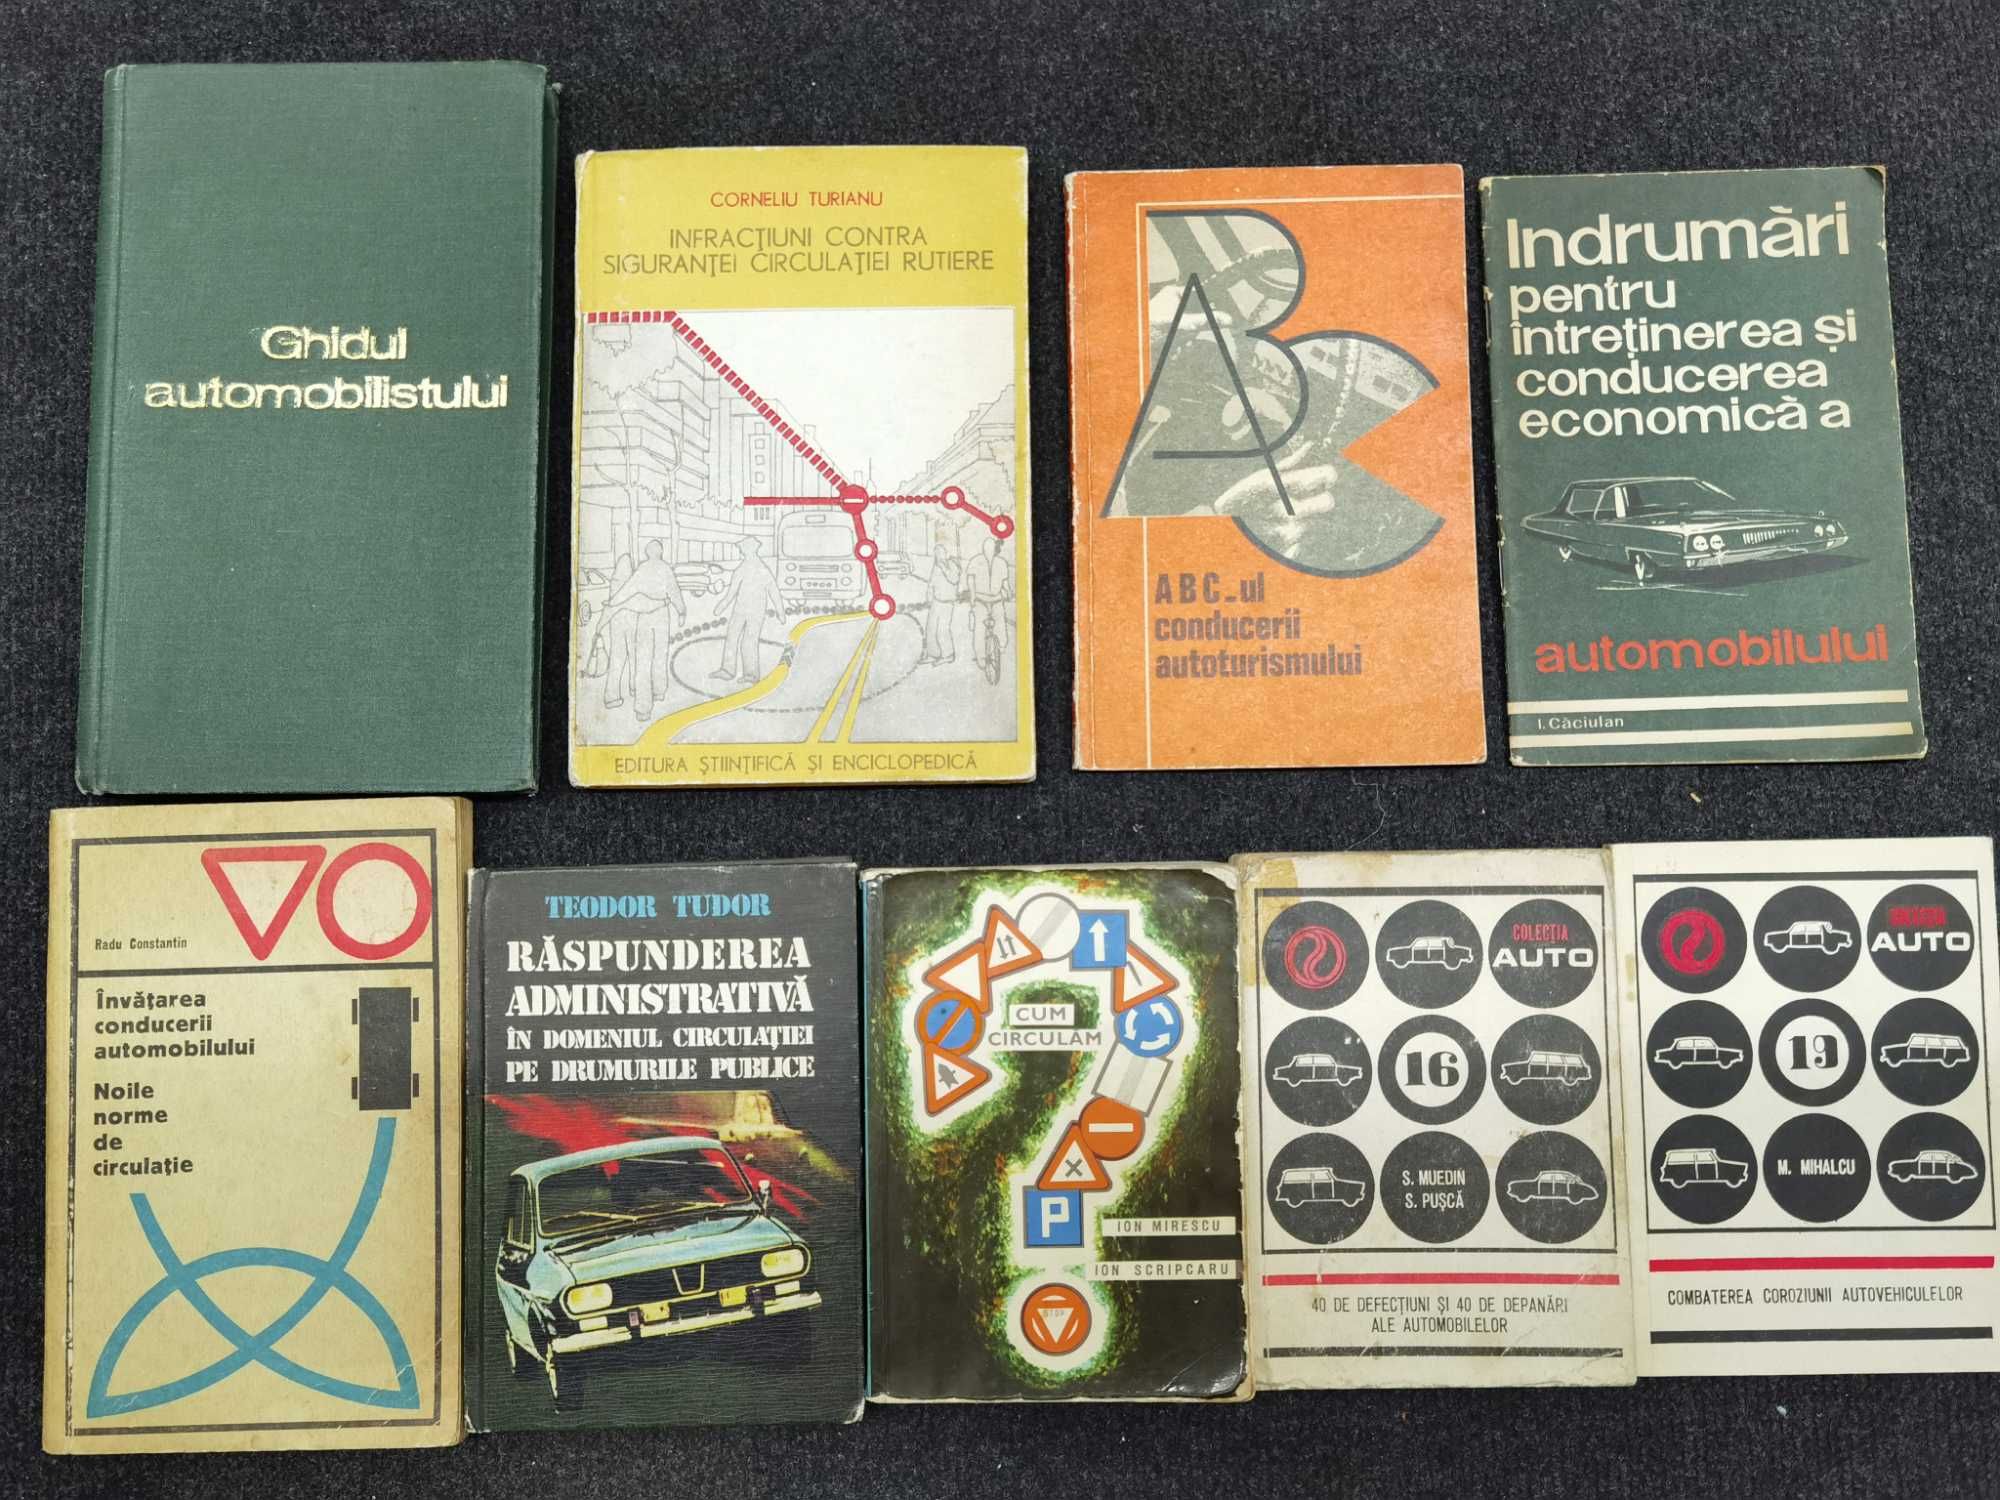 Carti vechi despre circulatie,automobile,auto,masini. ACR.,etc.